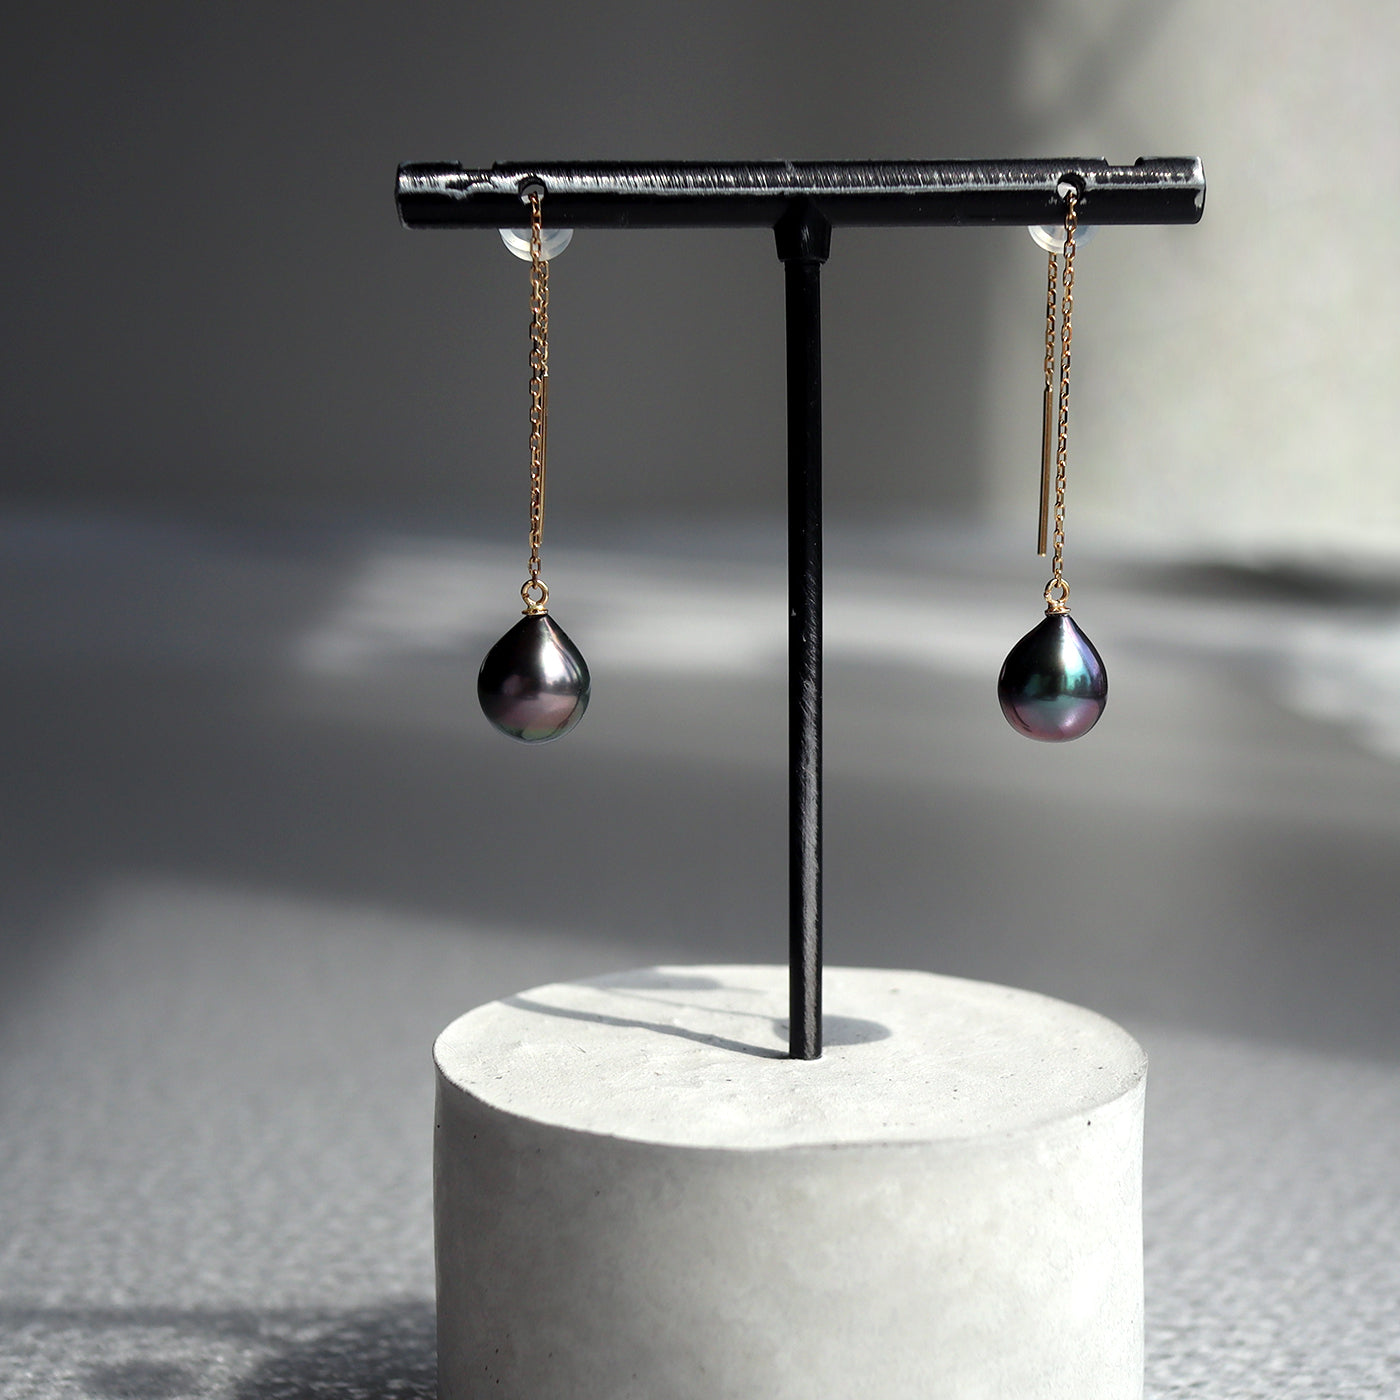 Bicolor Pearl Chain Earrings - 黒蝶パール